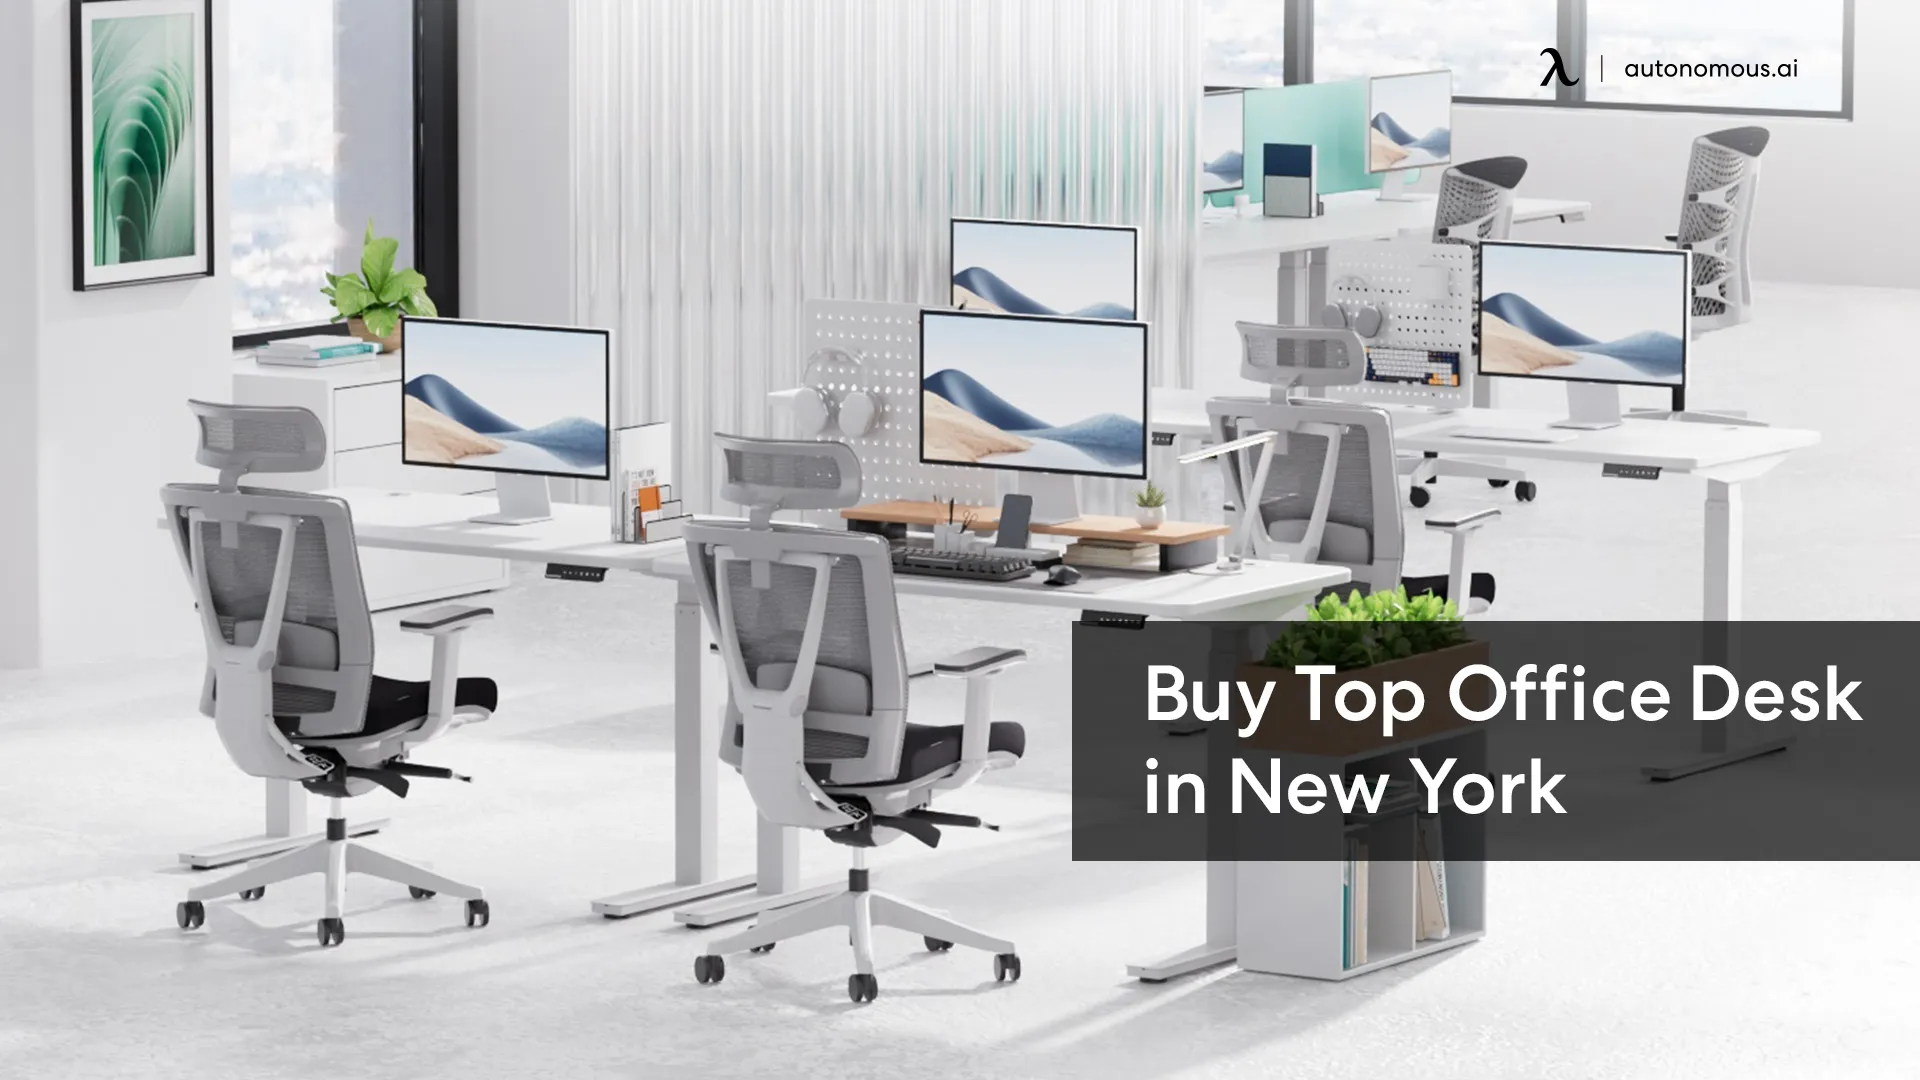 Where to Buy Office Desk in New York?